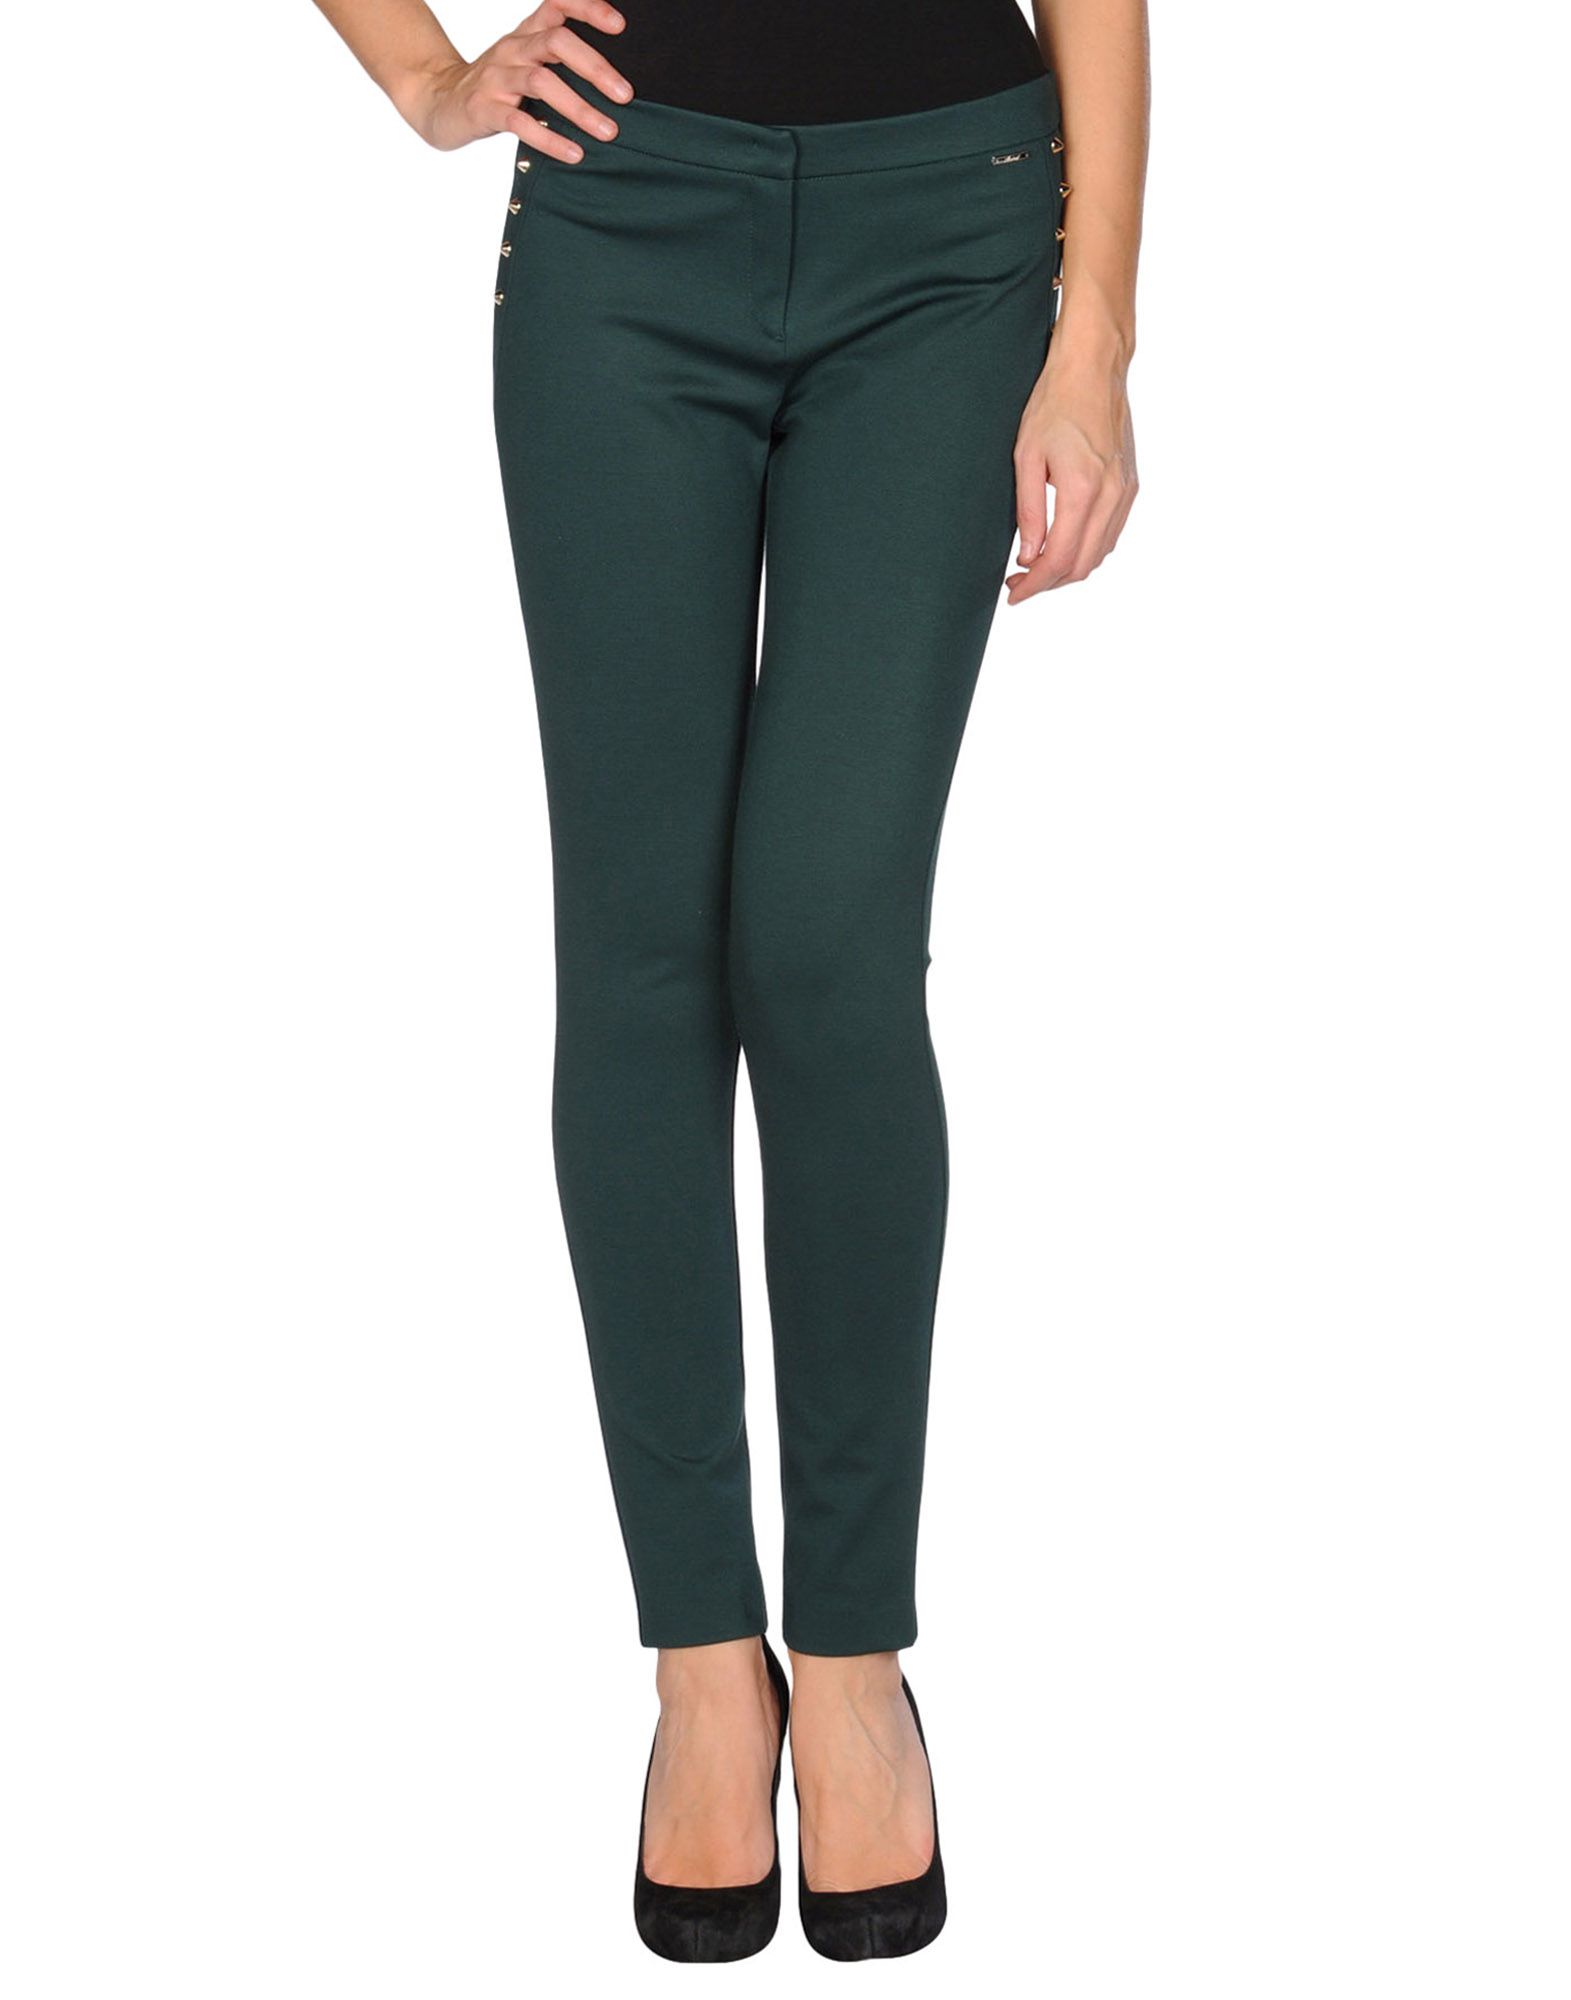 Foto Acciaio Pantalones Mujer Verde oscuro